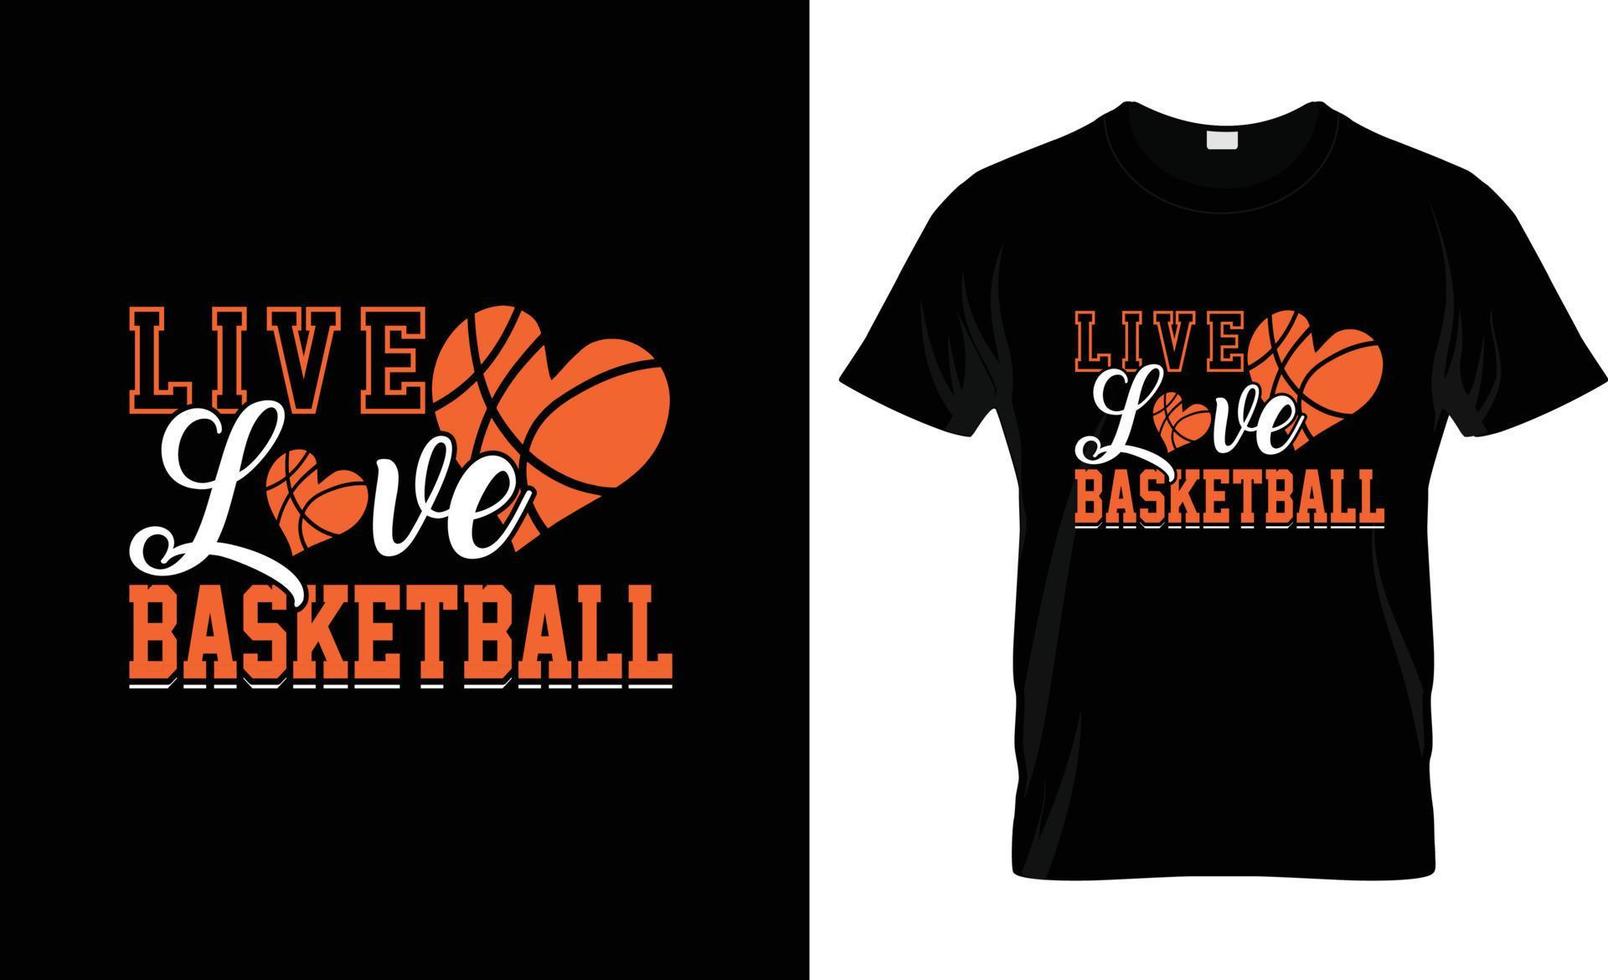 Live love basketball Basketball t-shirt design, Basketball t-shirt slogan and apparel design, Basketball typography, Basketball vector, Basketball illustration vector